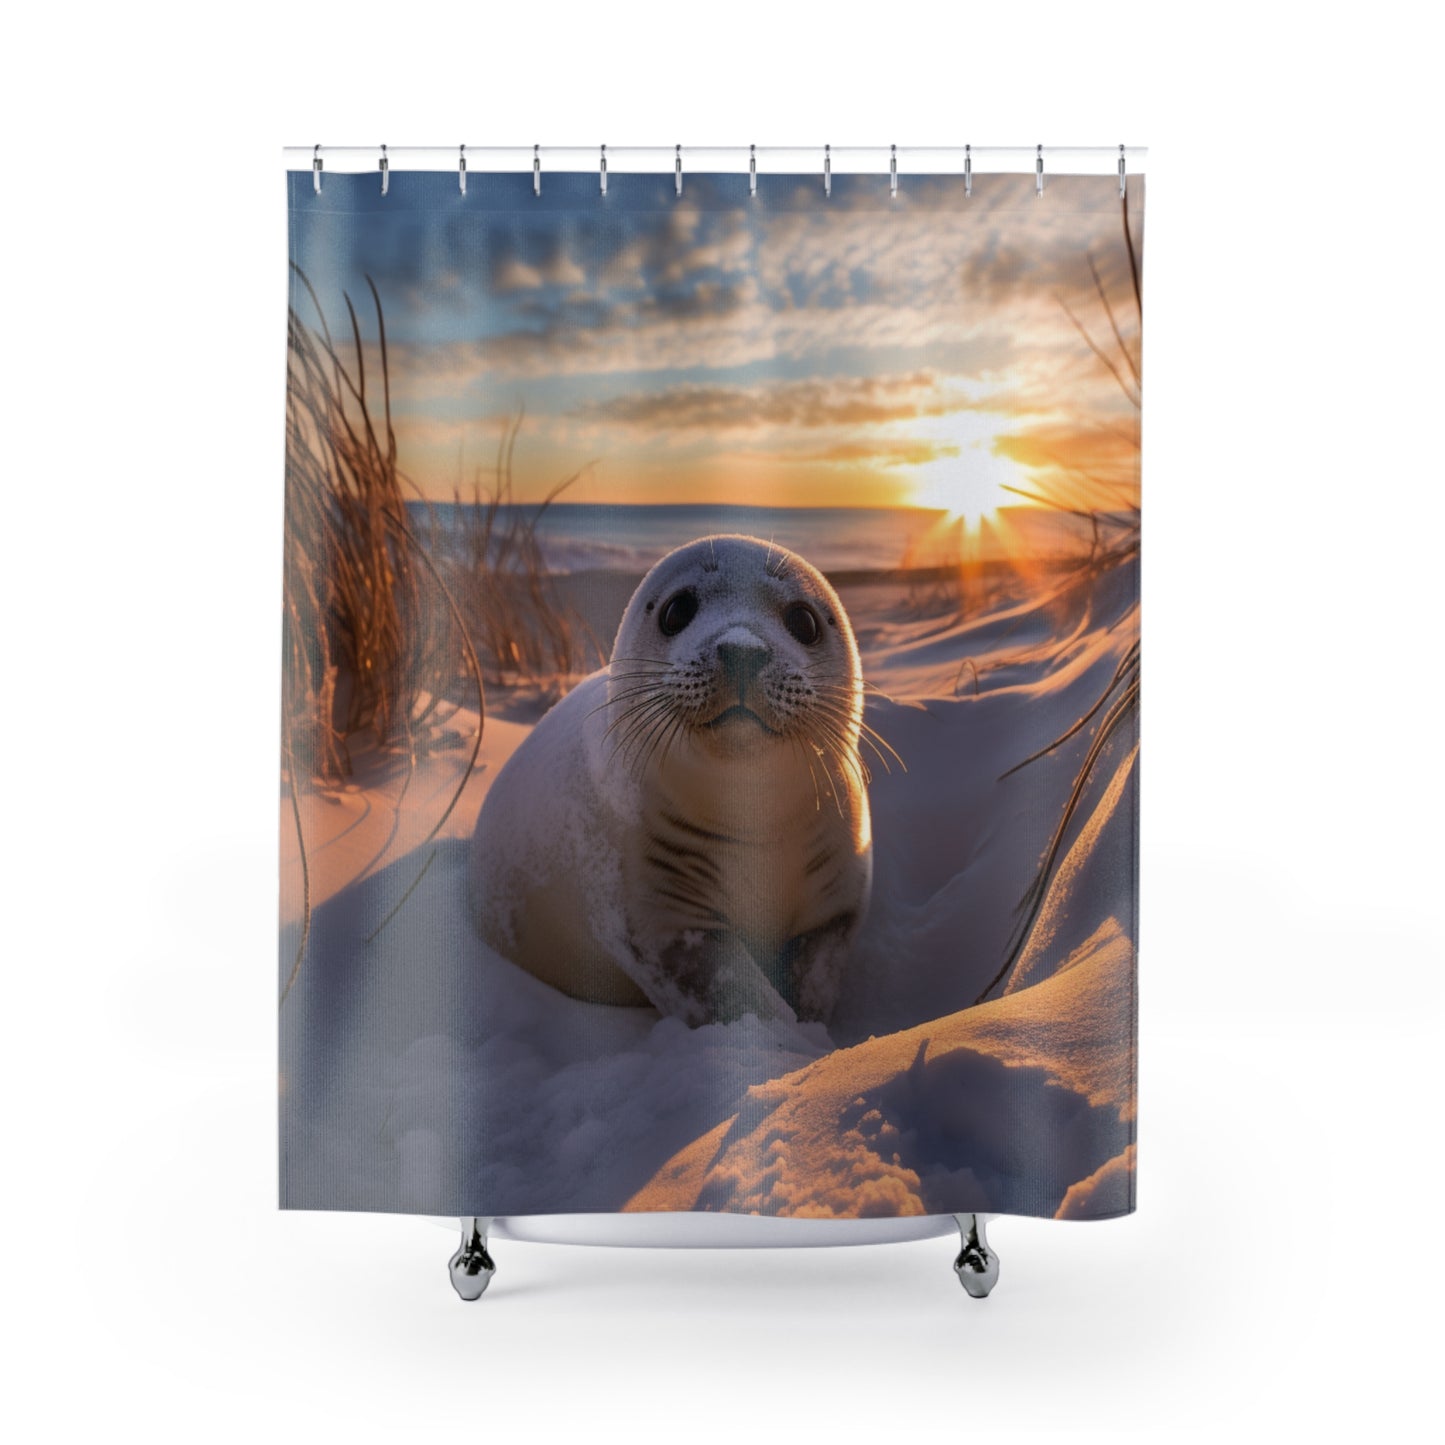 Winter Beach Scene Shower Curtain - Adorable Baby Seal